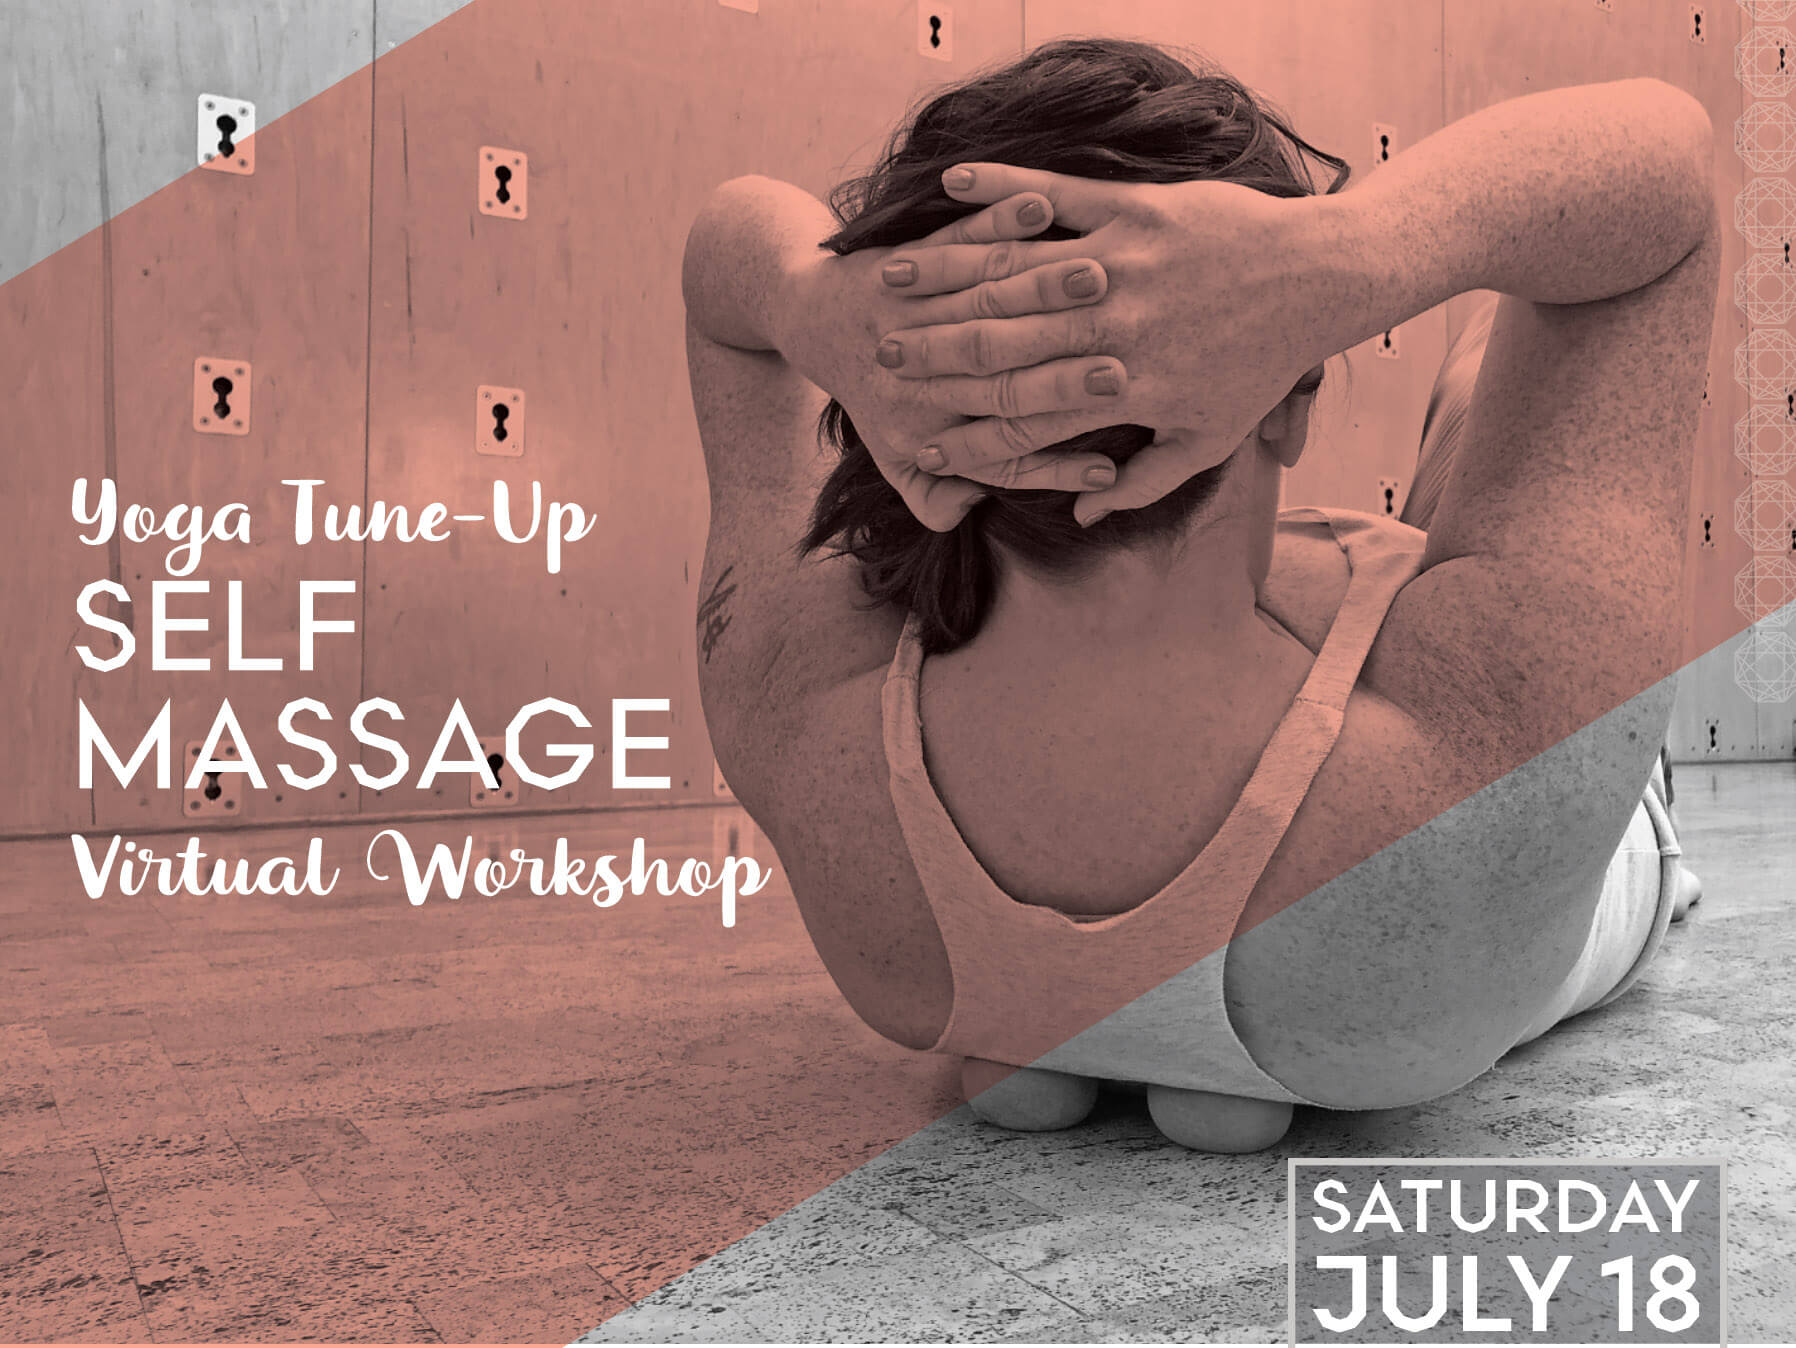 Yoga Tune-Up Self Massage Virtual Workshop